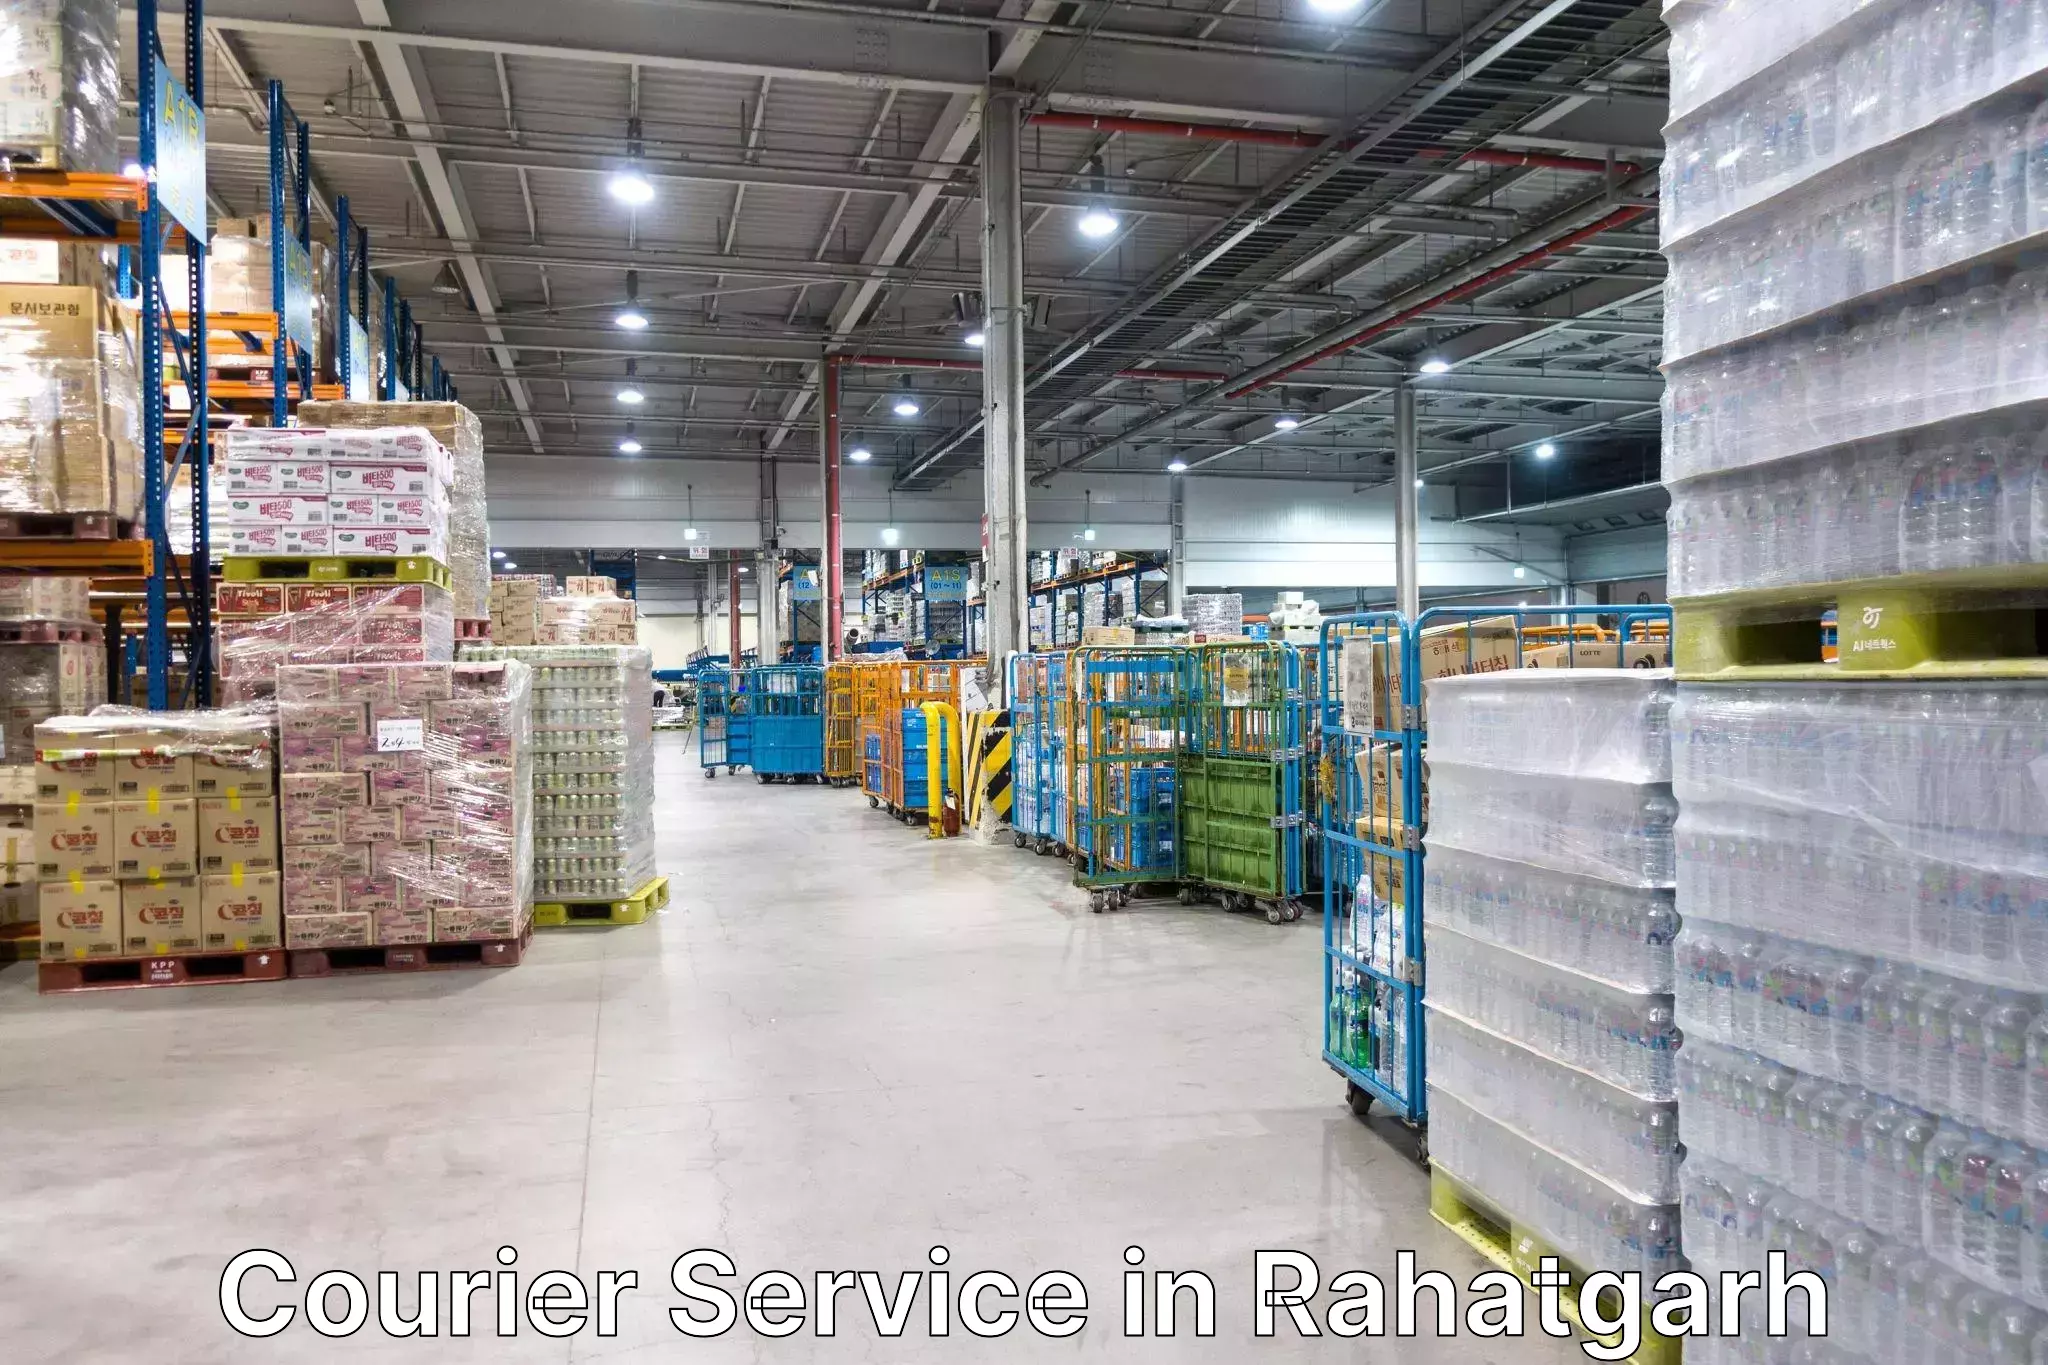 Courier service comparison in Rahatgarh